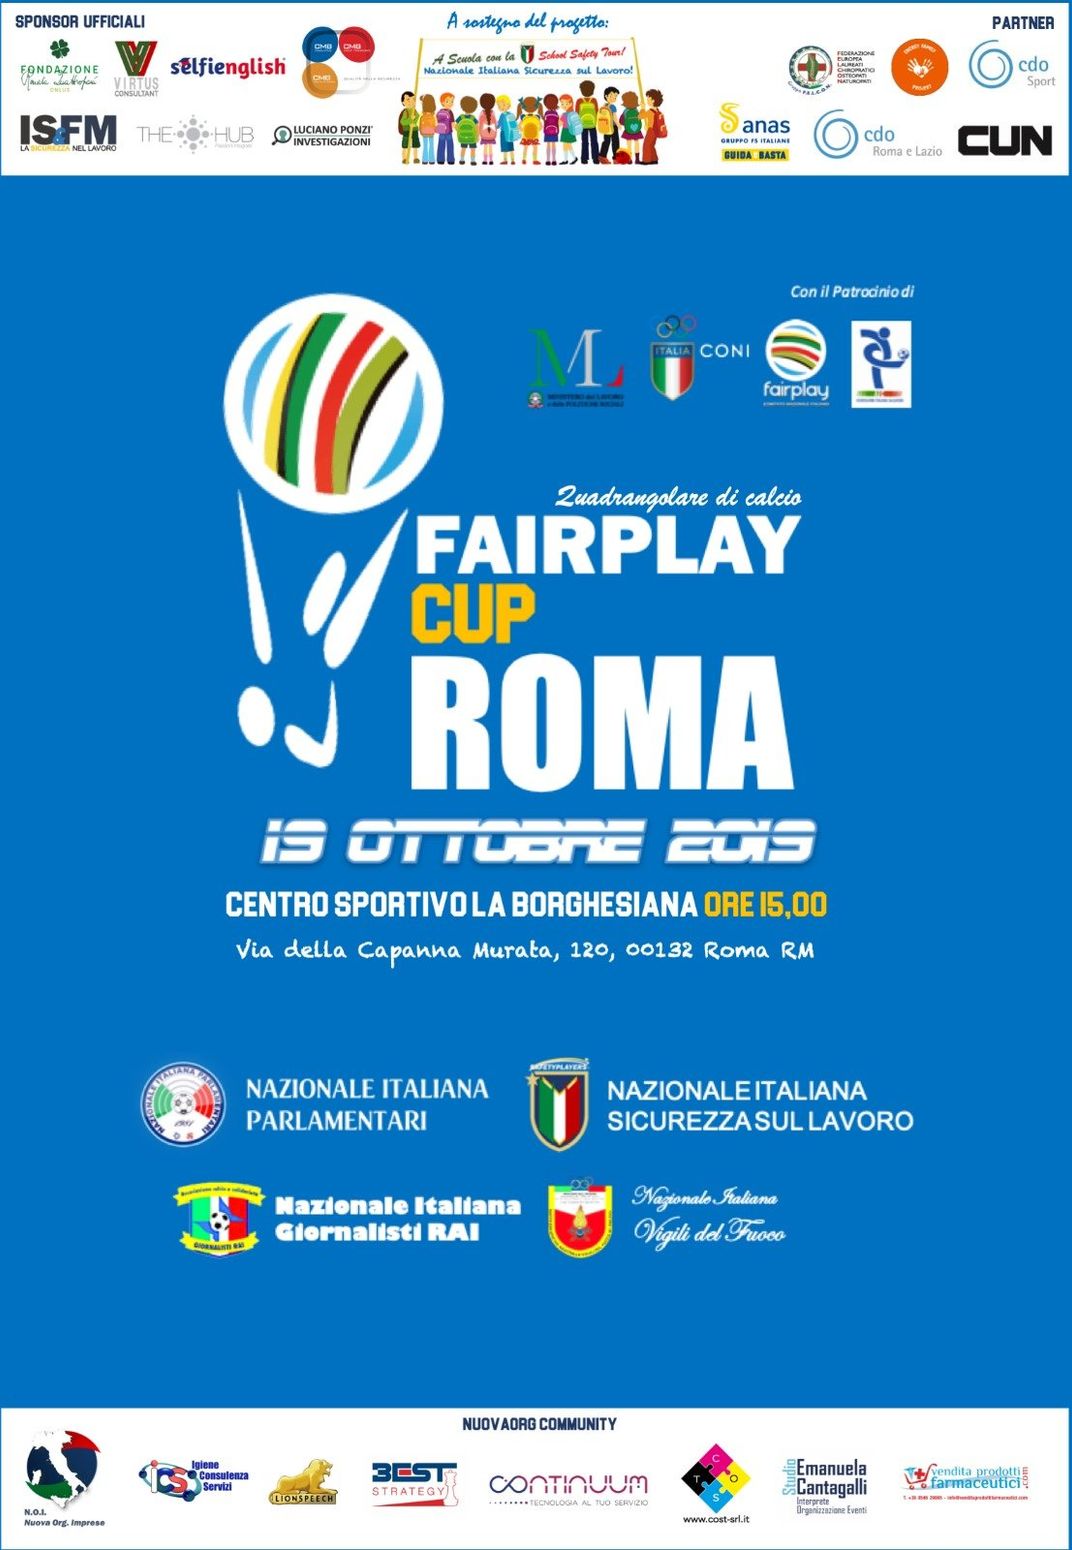 fairplay cup roma 19 ottobre 2019